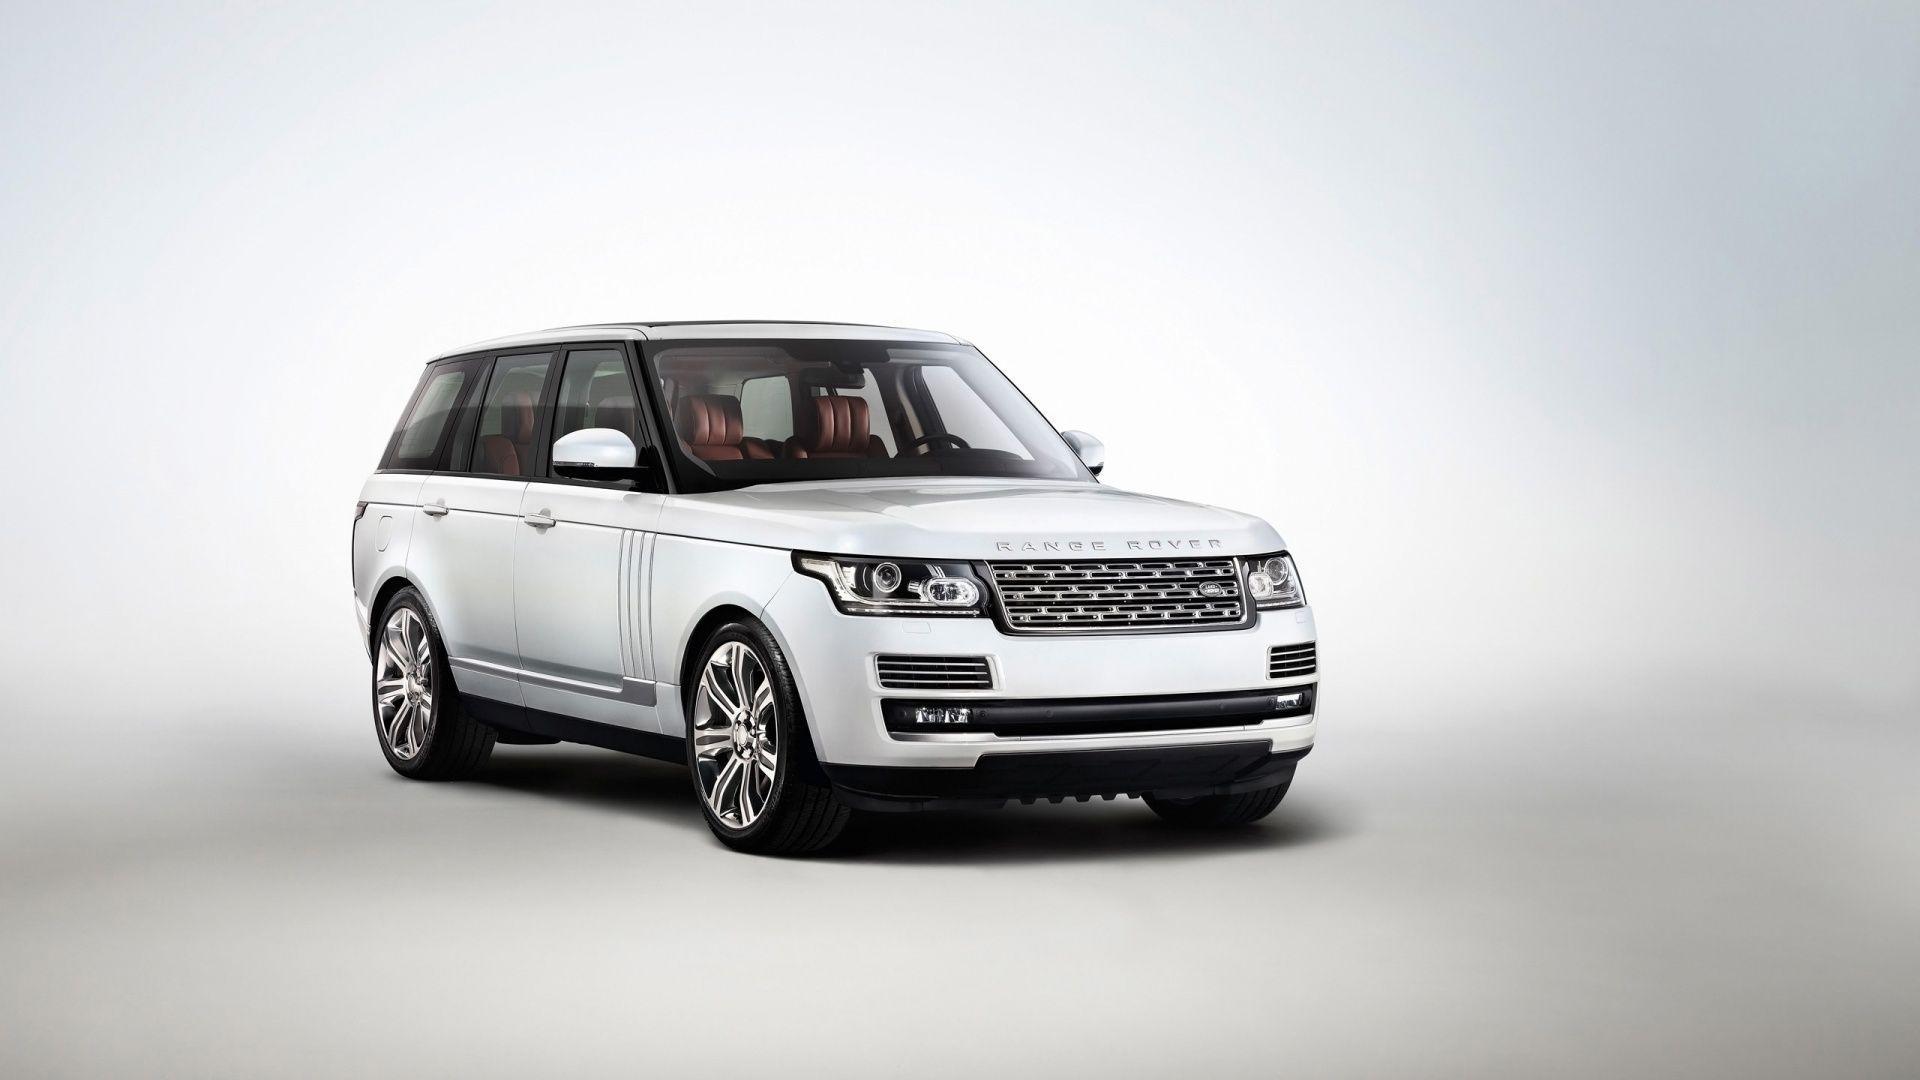 Range Rover Evoque Car Wallpaper Free. New Car Concepts